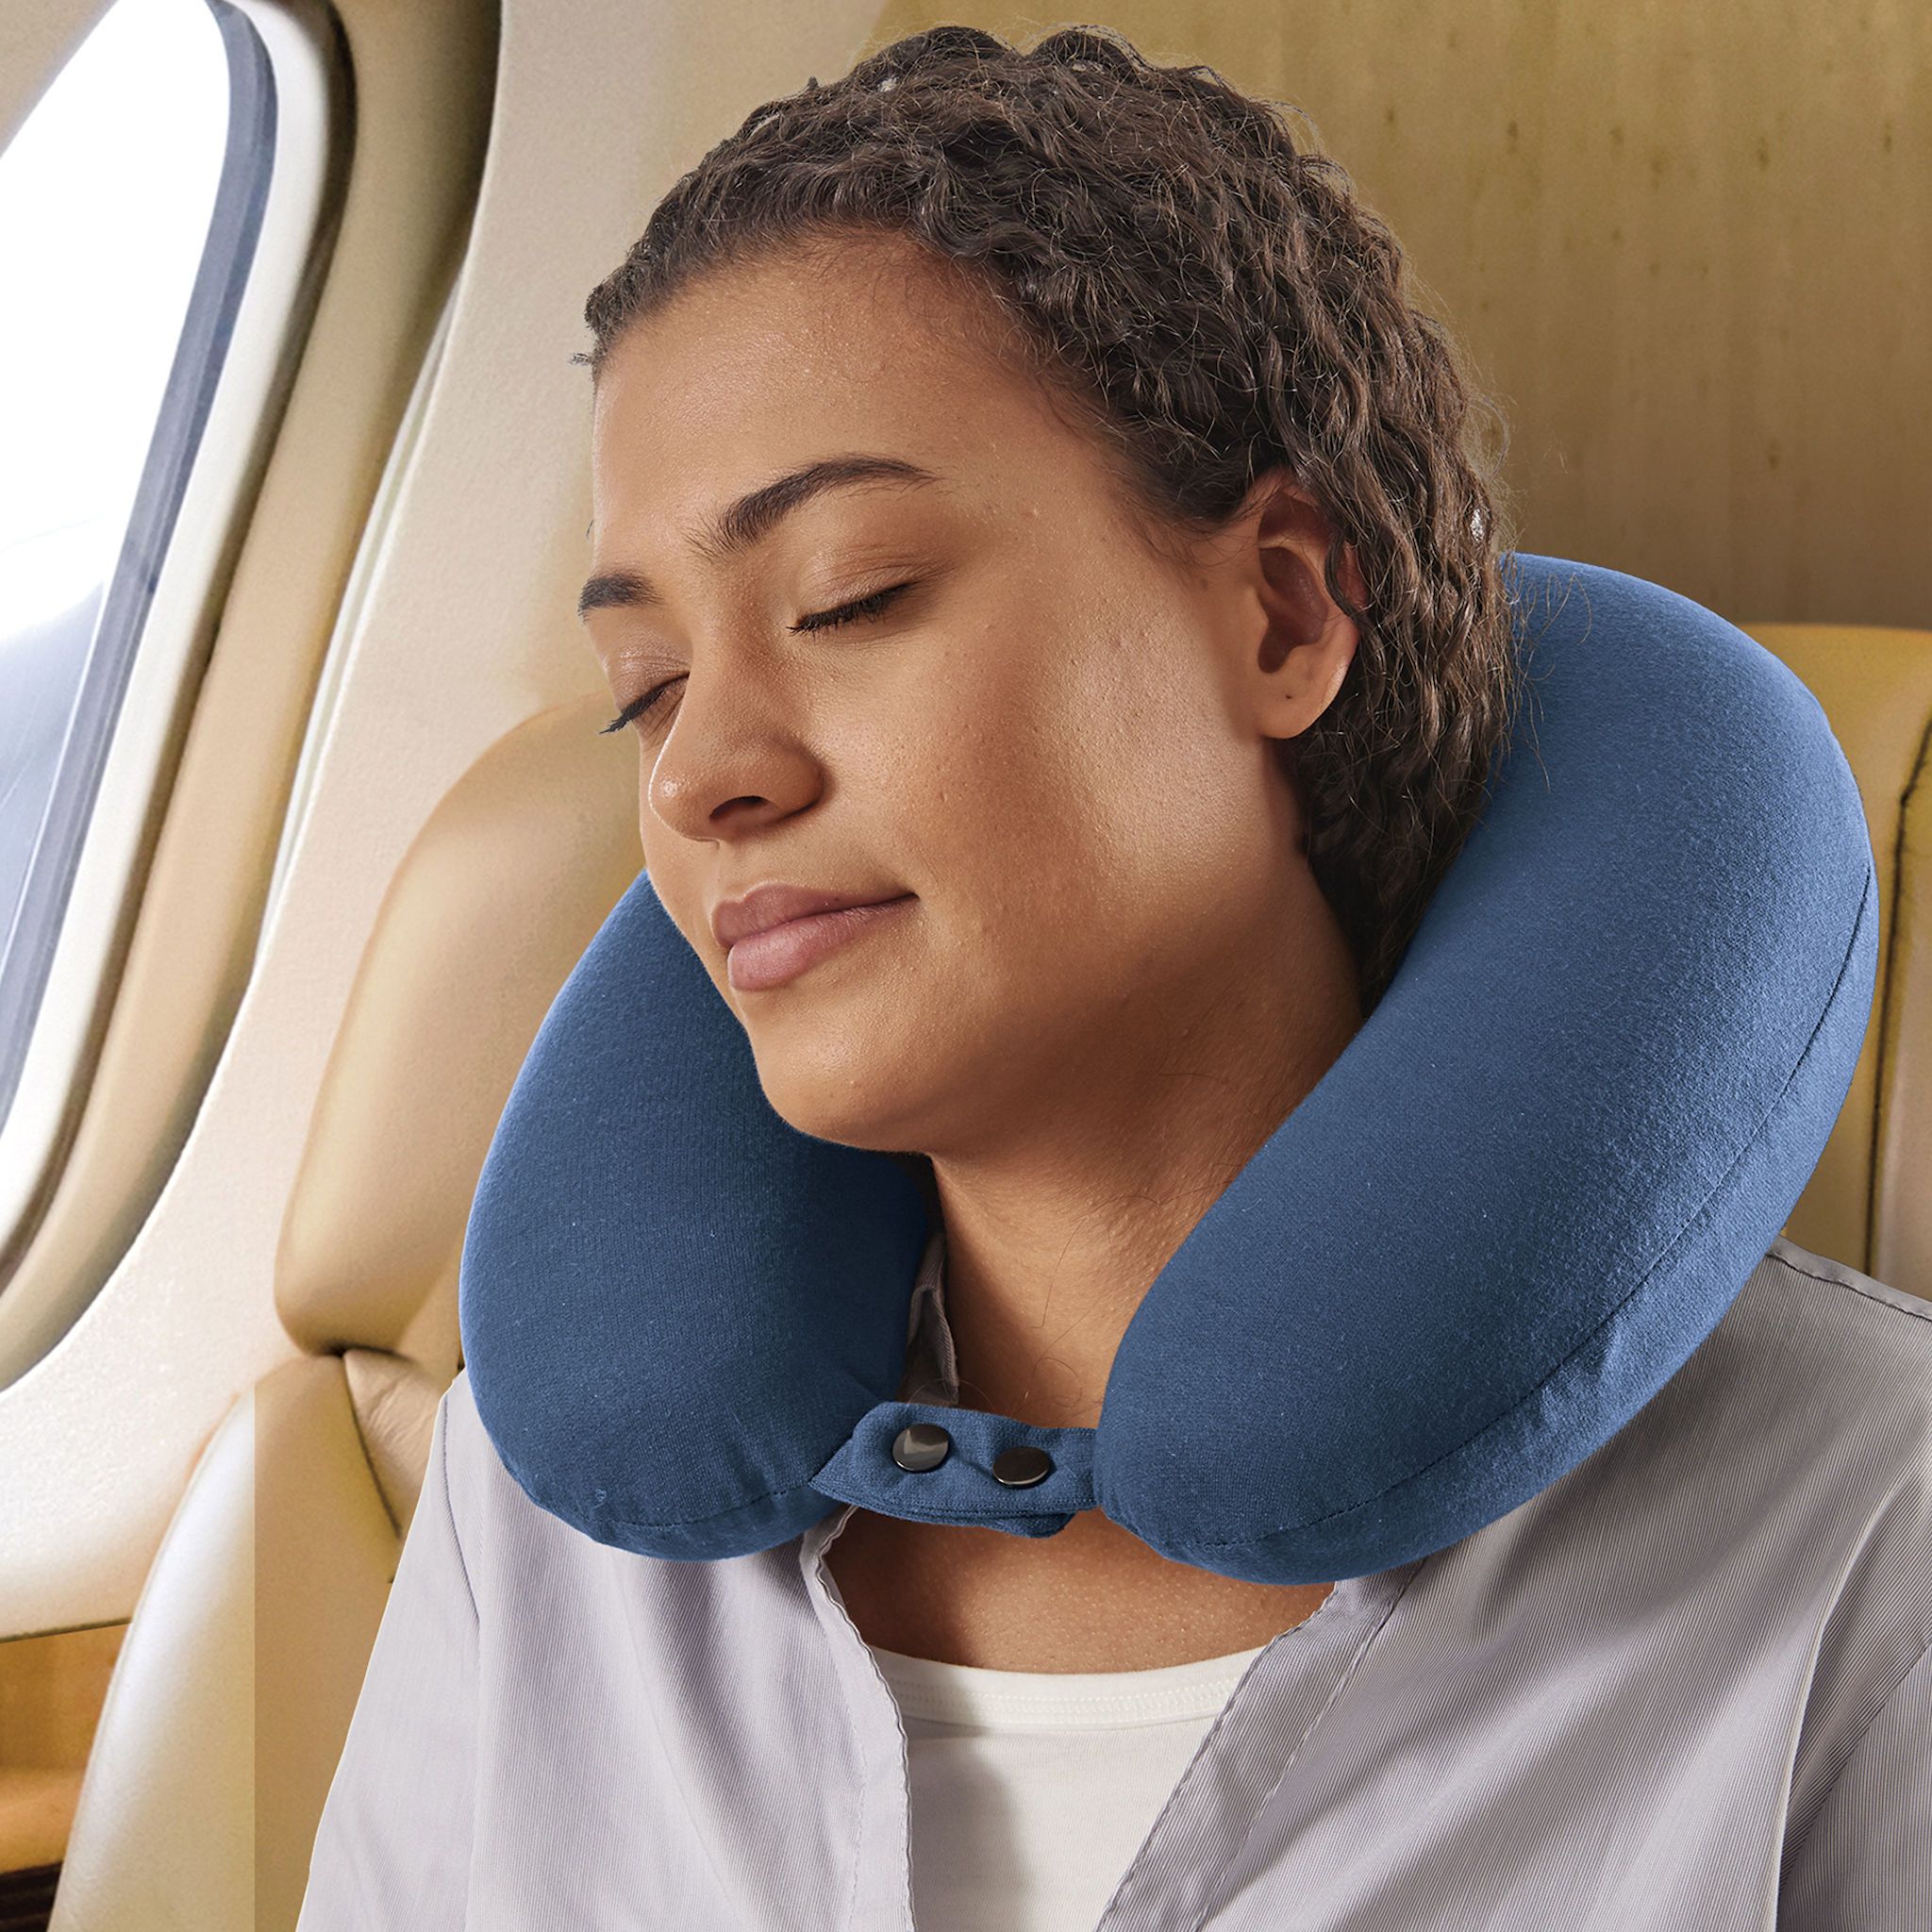 Memory Foam Travel Pillow Airplane Neck Rest & Plane Accessories